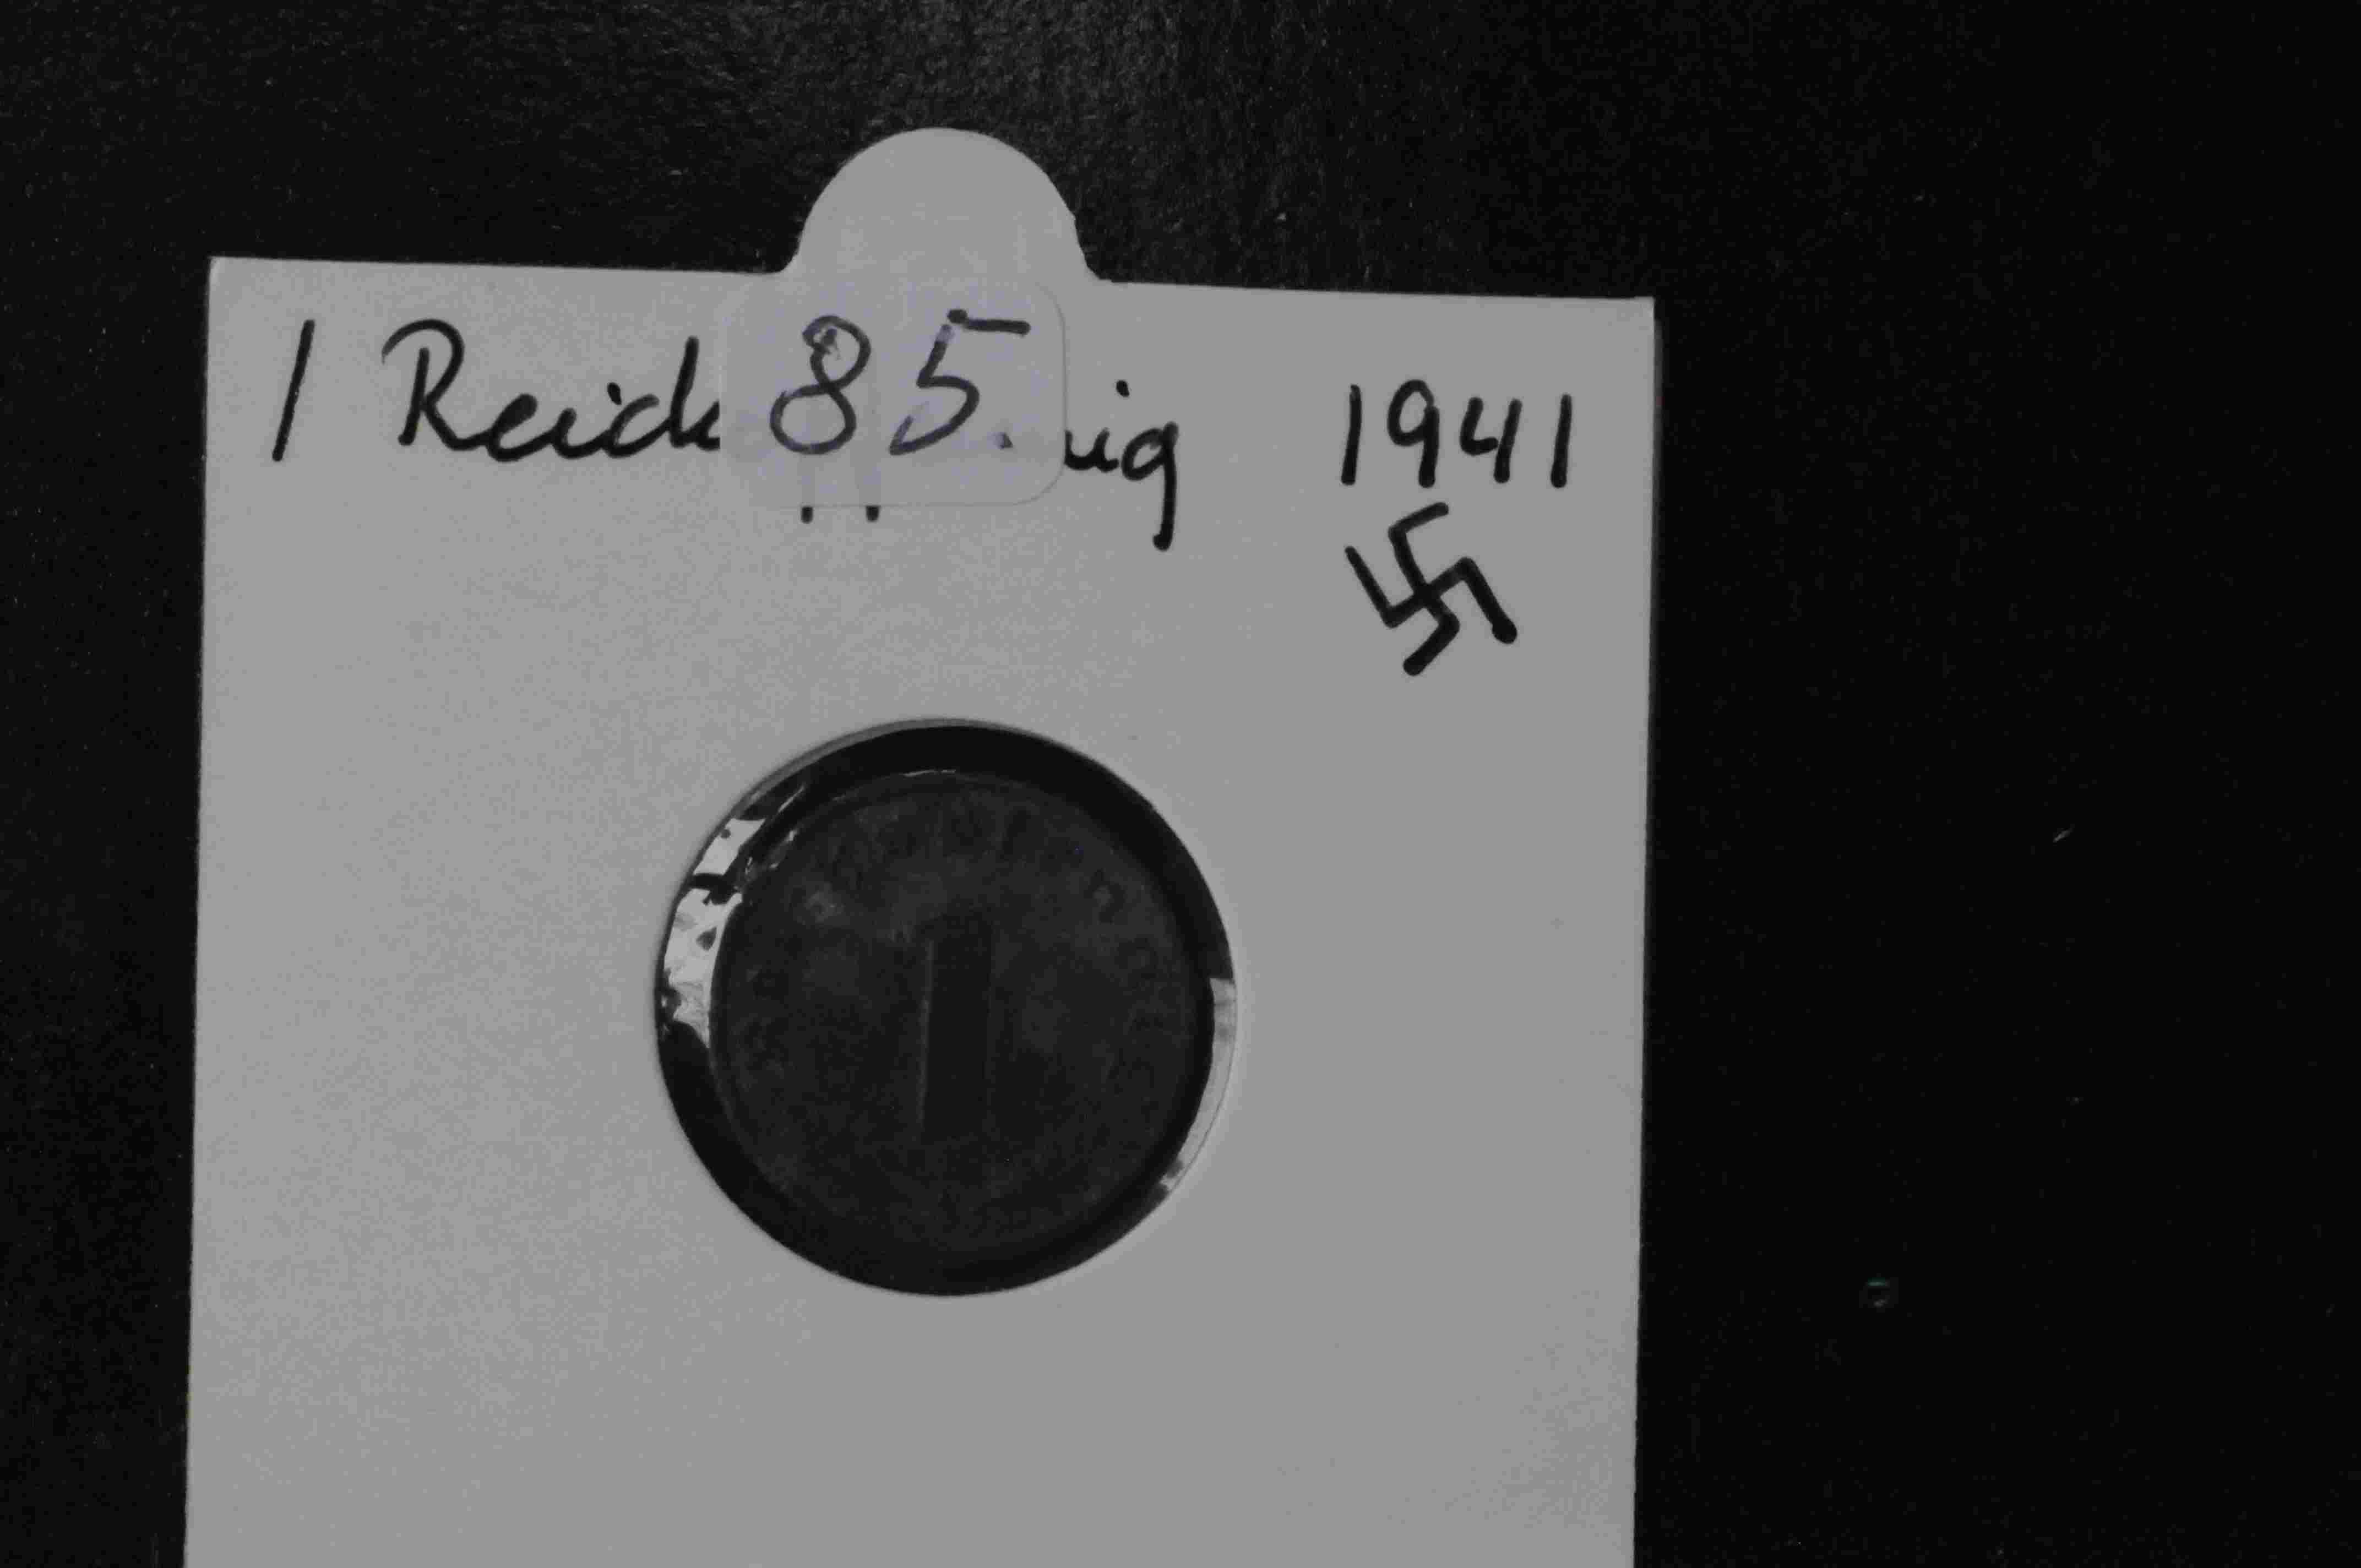 1 reichpenning 1941 pris pr stk